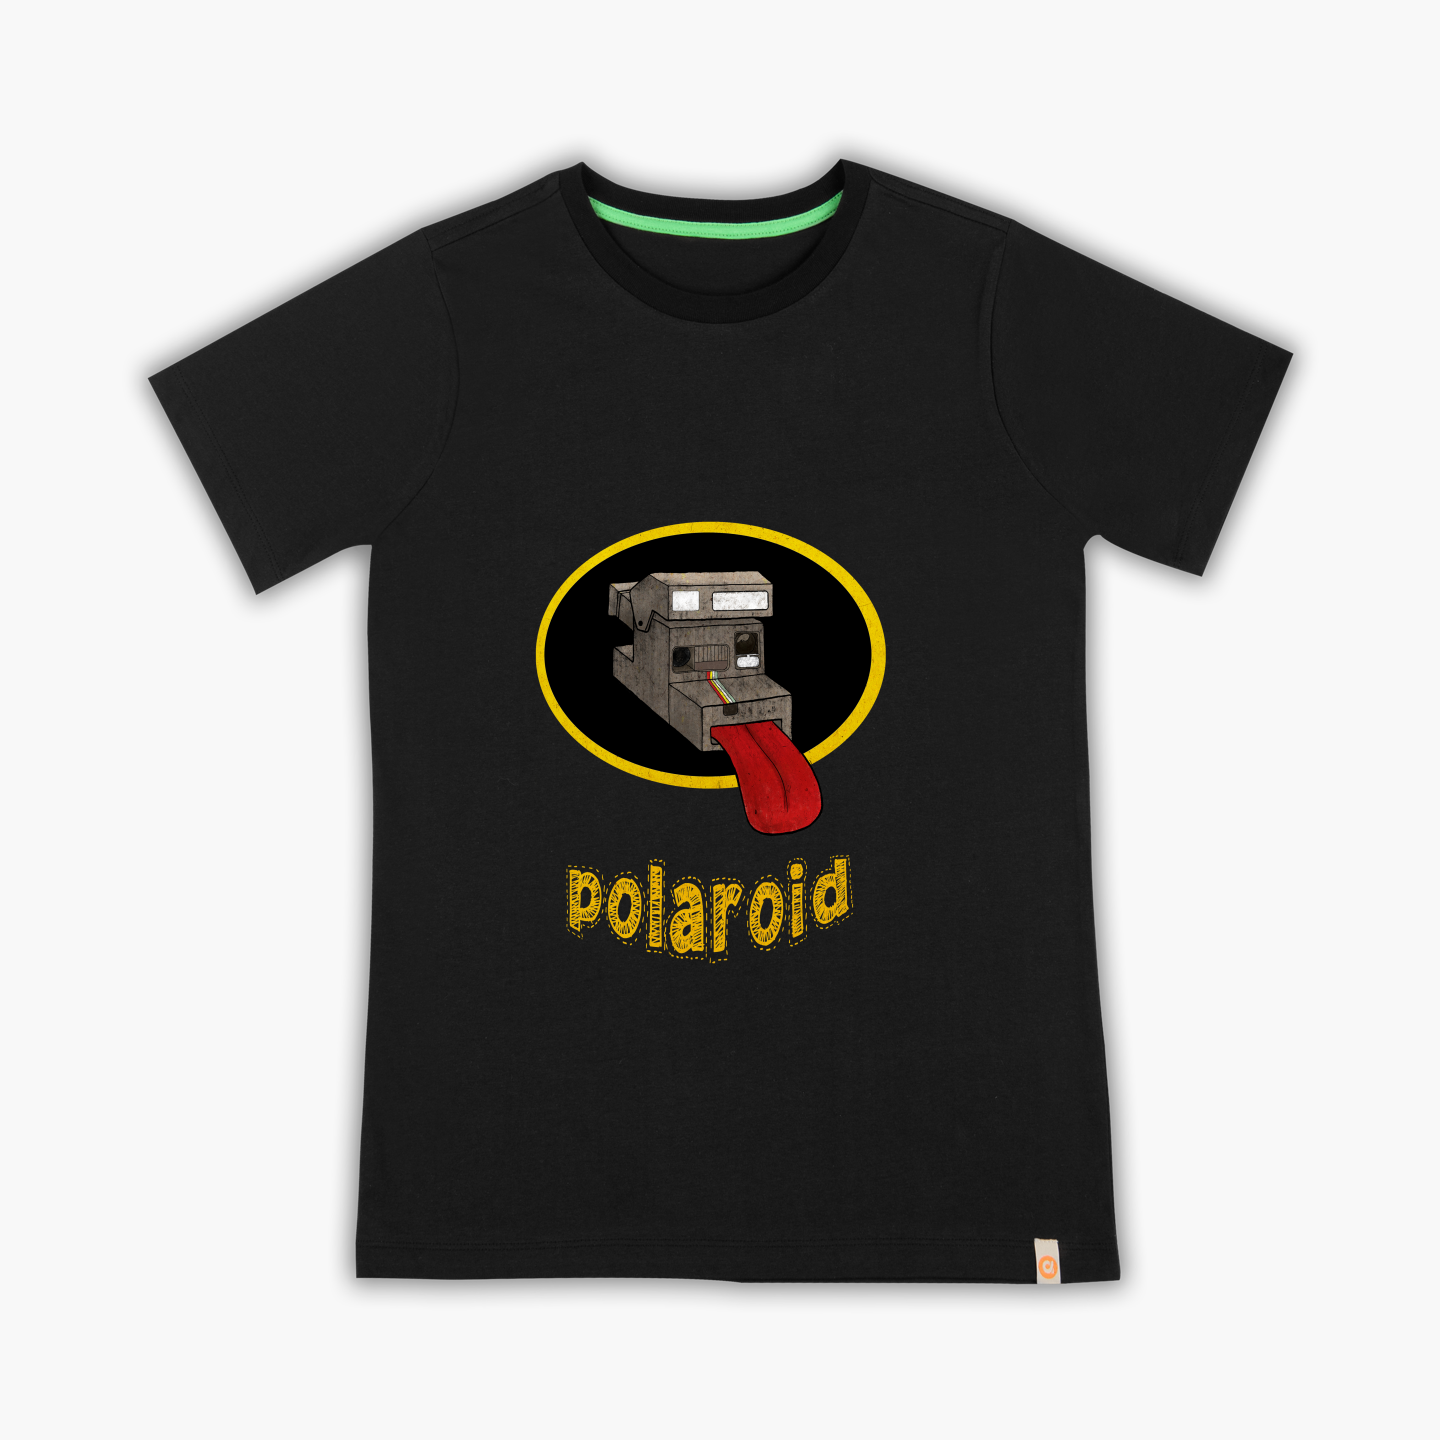 Şakacı Poloraid  - Tişört